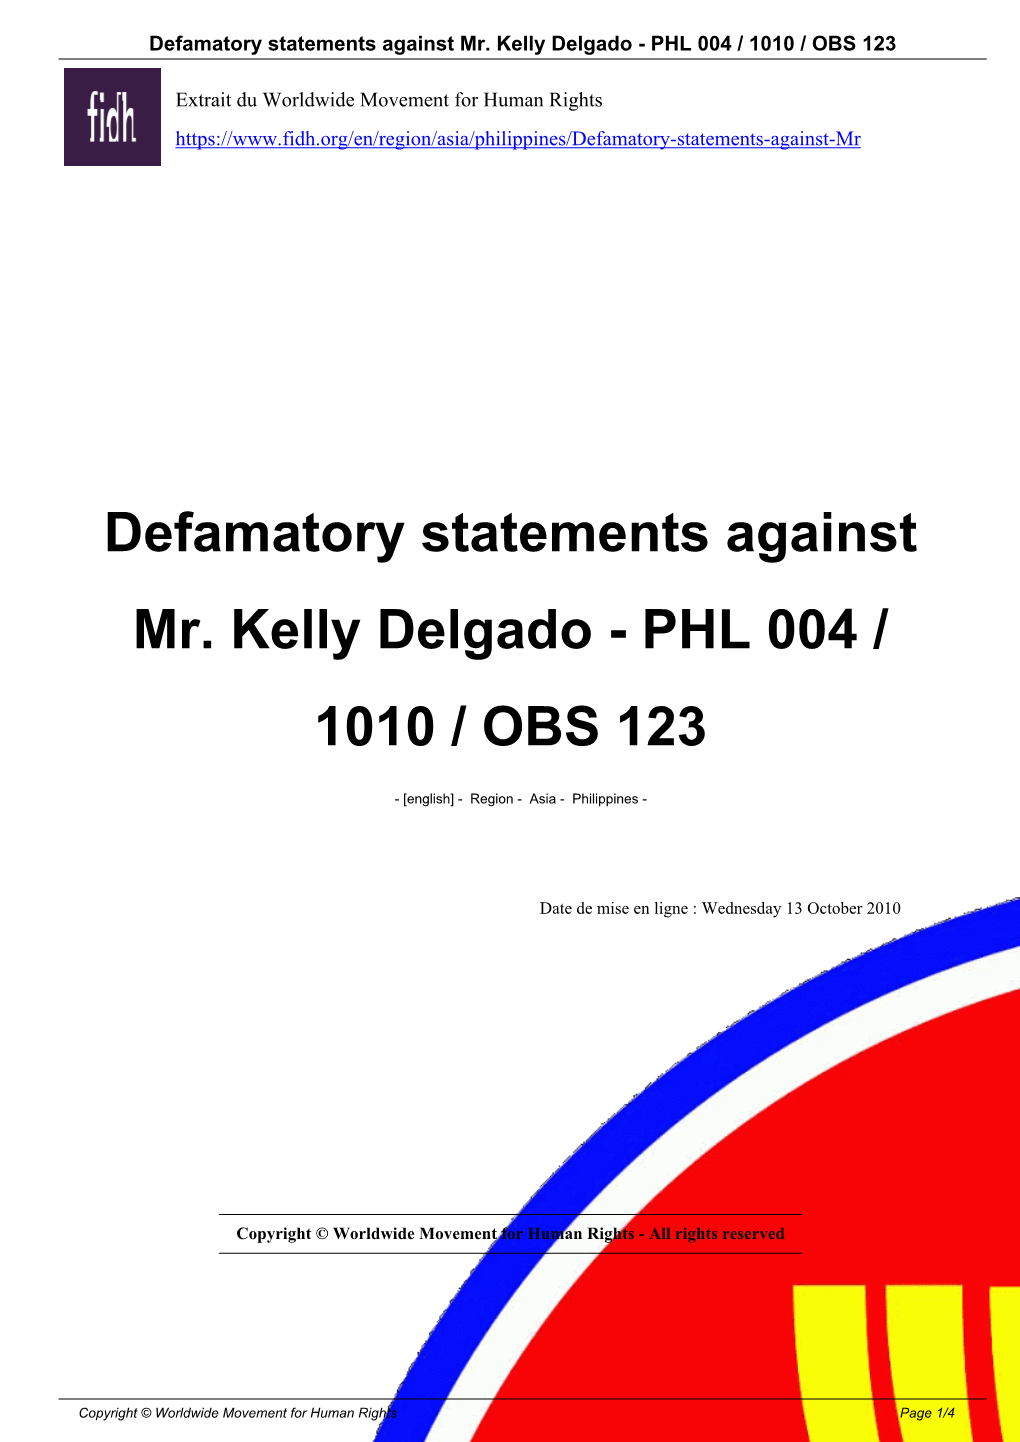 Defamatory Statements Against Mr. Kelly Delgado - PHL 004 / 1010 / OBS 123